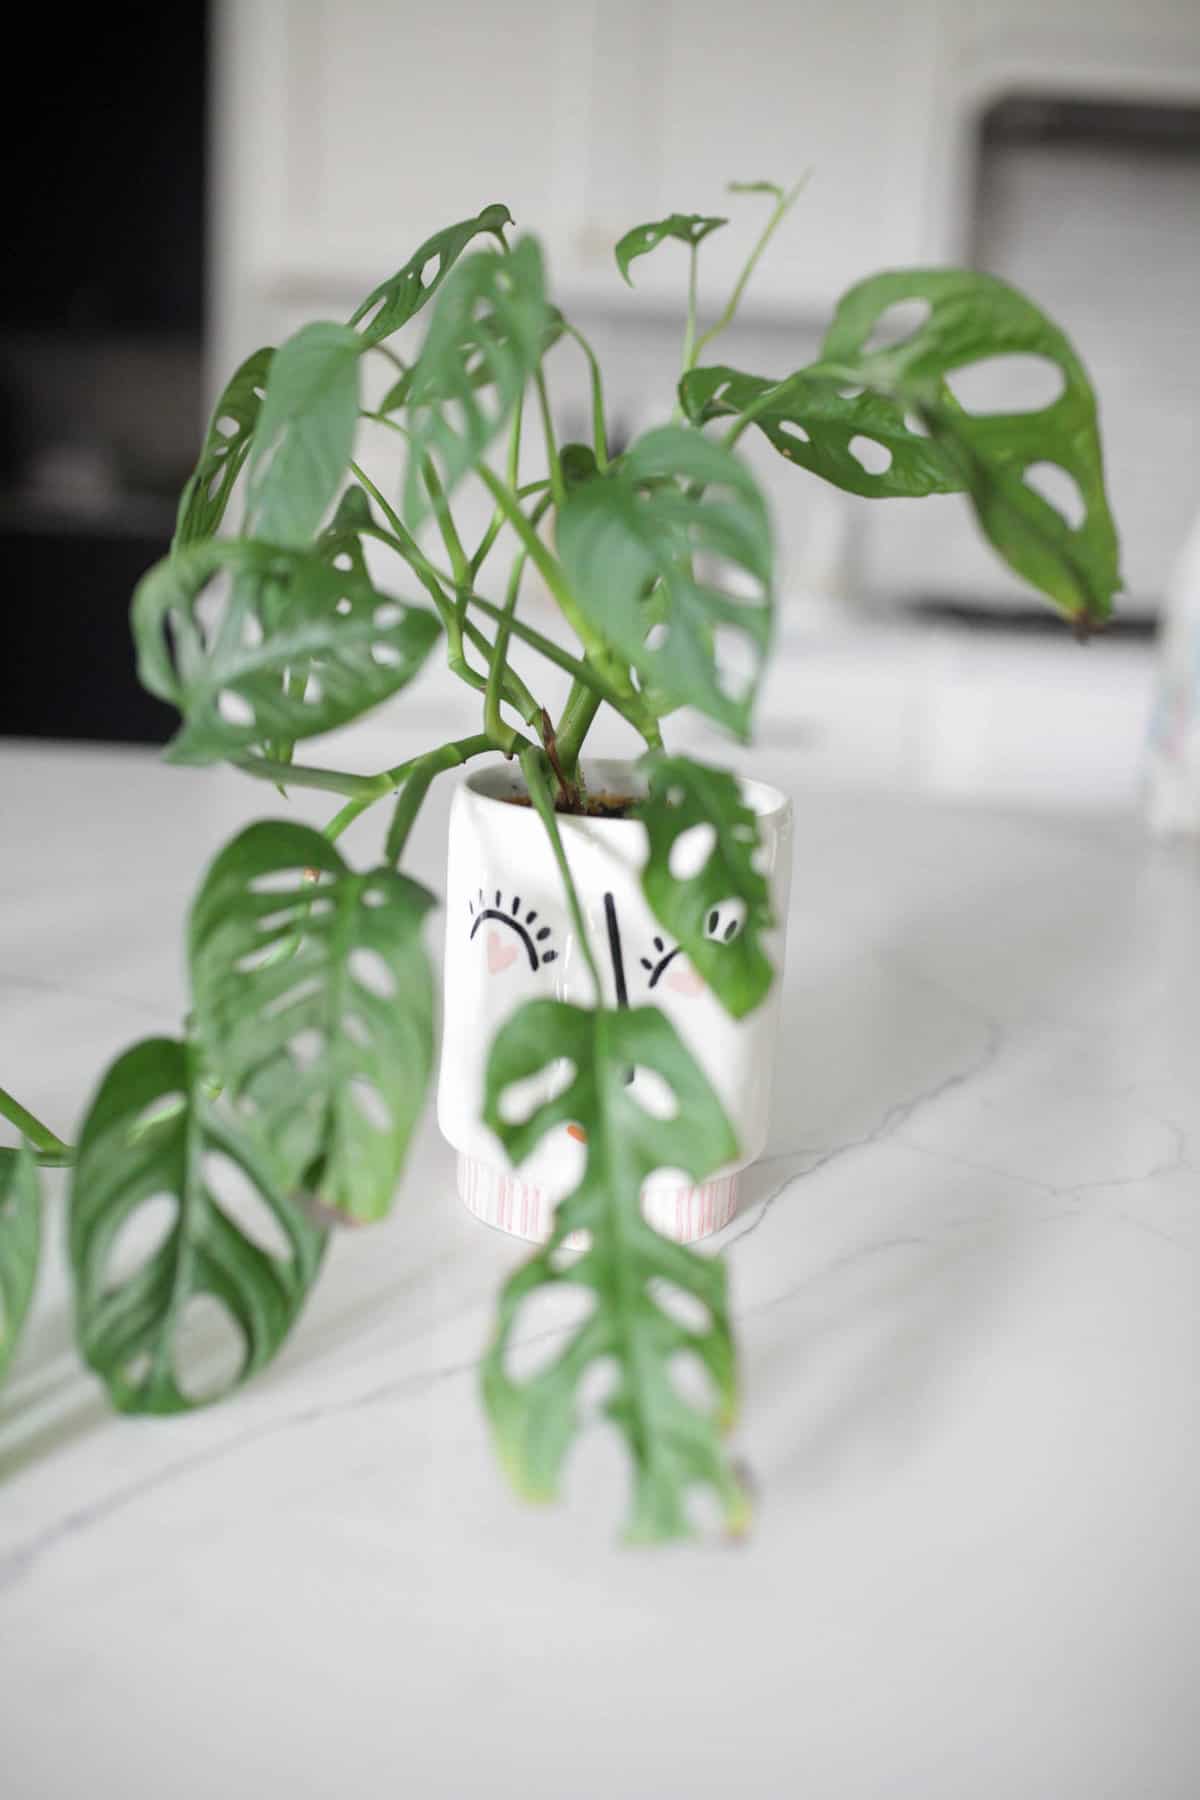 Monstera Adansonii plant